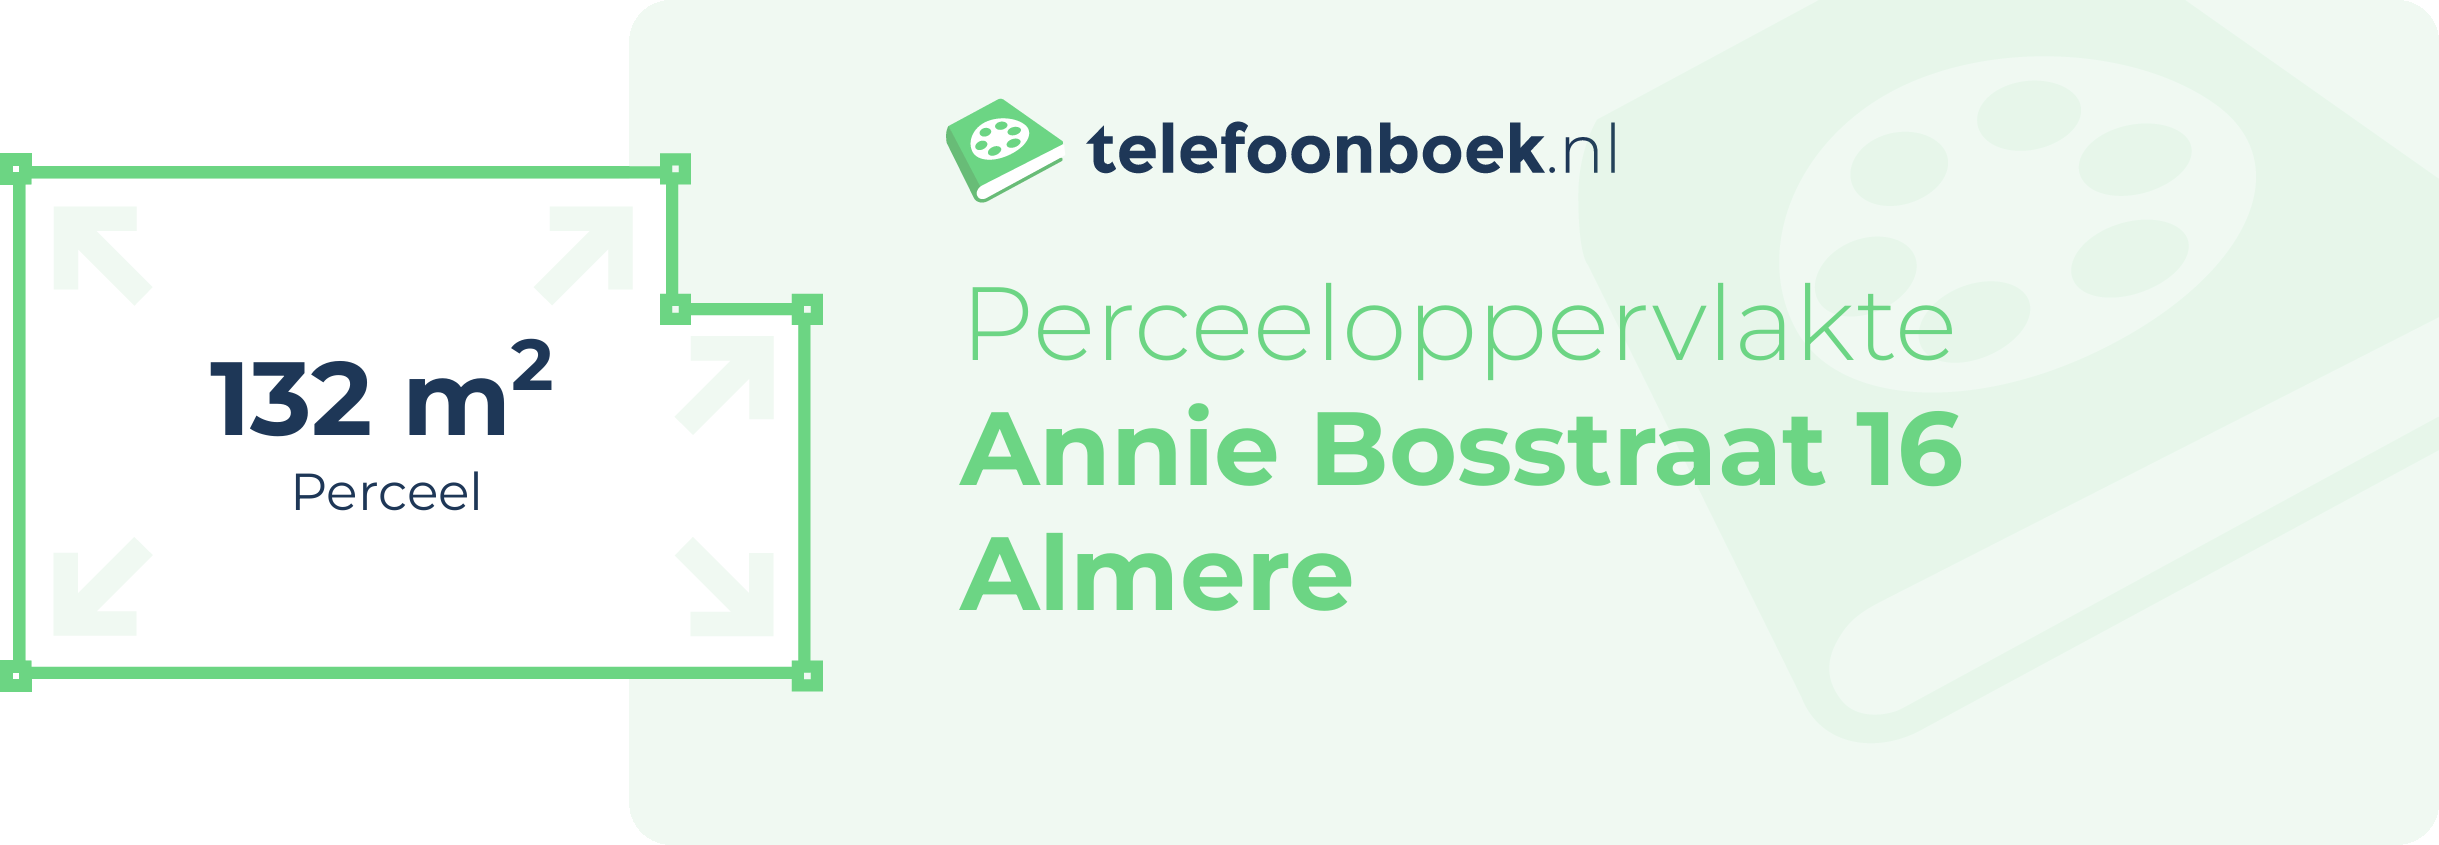 Perceeloppervlakte Annie Bosstraat 16 Almere